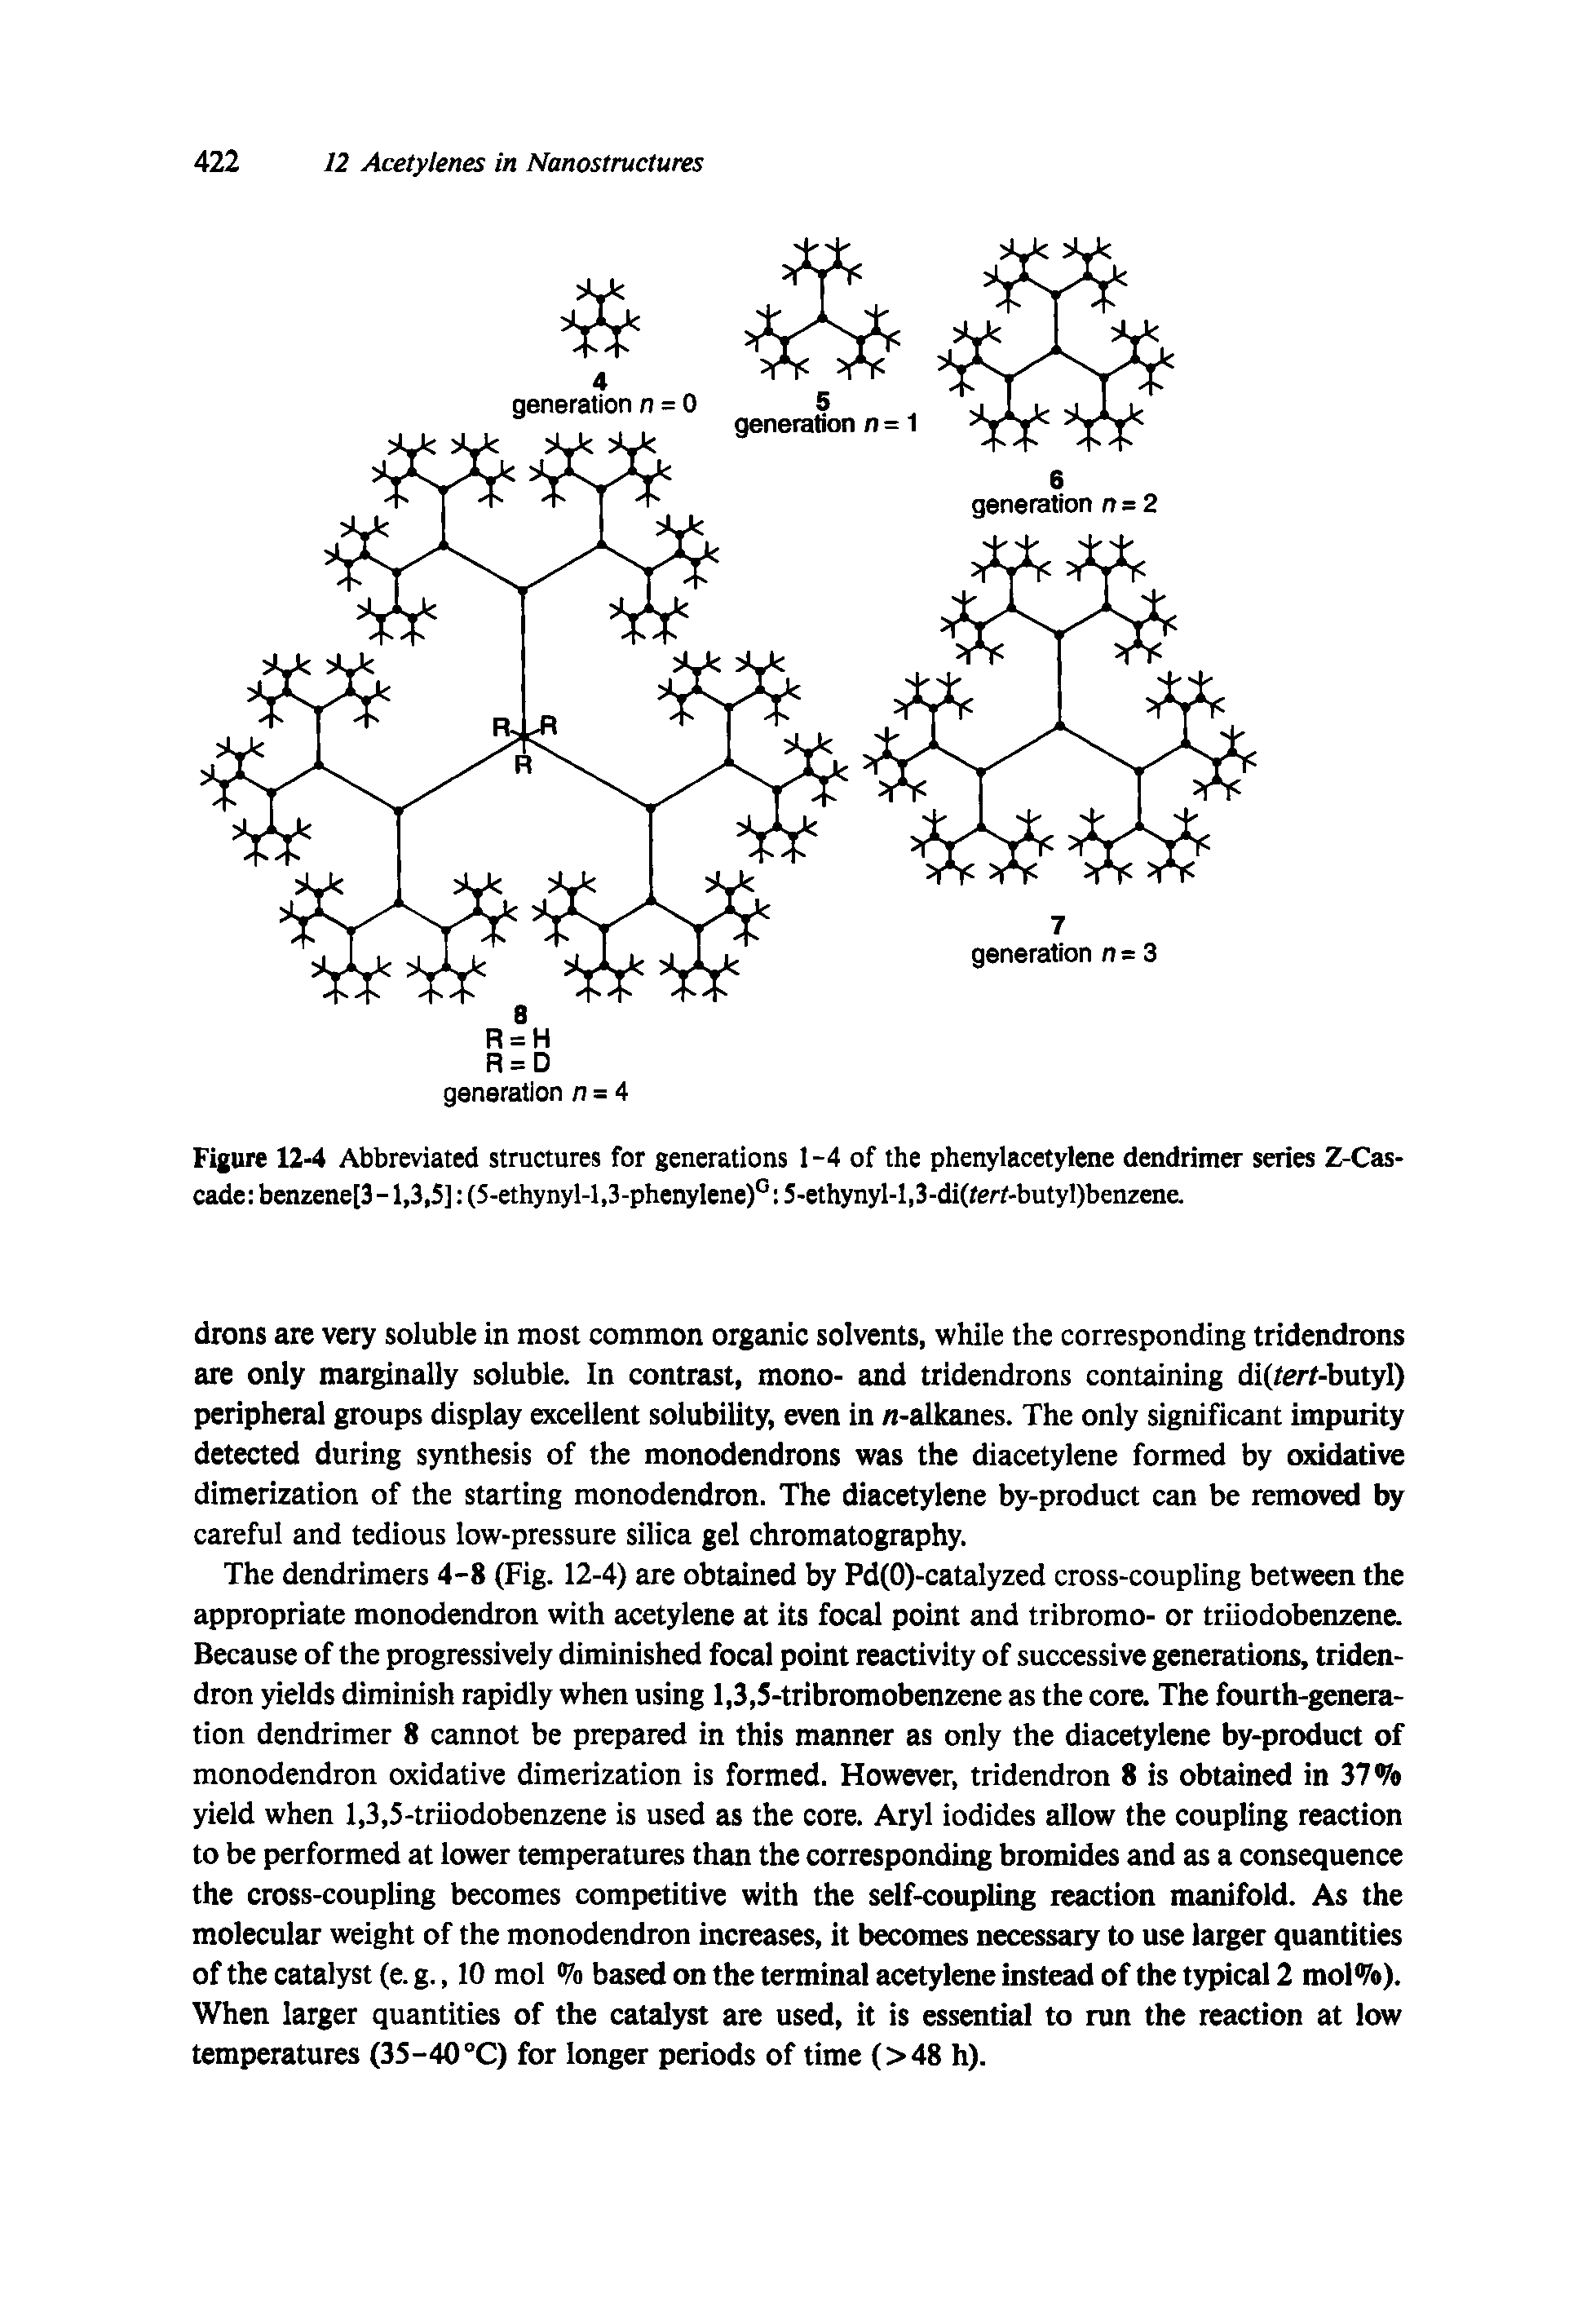 Figure 12-4 Abbreviated structures for generations 1-4 of the phenylacetylene dendrimer series Z-Cas-cade benzene[3 -1,3.5] (5-ethynyl-l,3-phenylene)° 5-ethynyl-l,3-di(terr-butyl)benzene.